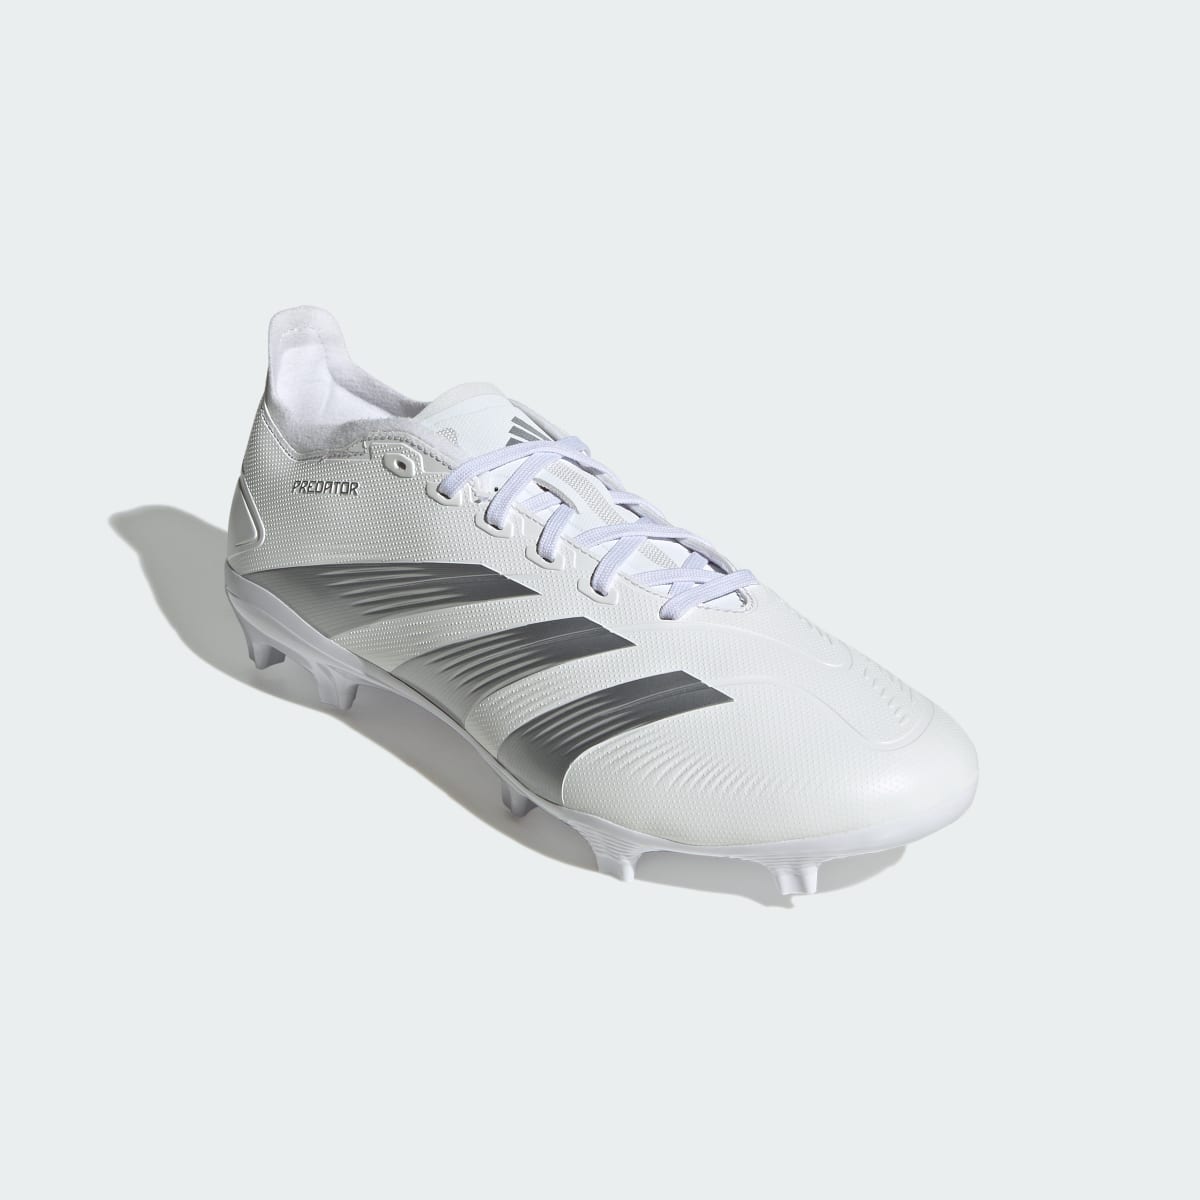 Adidas Predator League Firm Ground Football Boots. 5